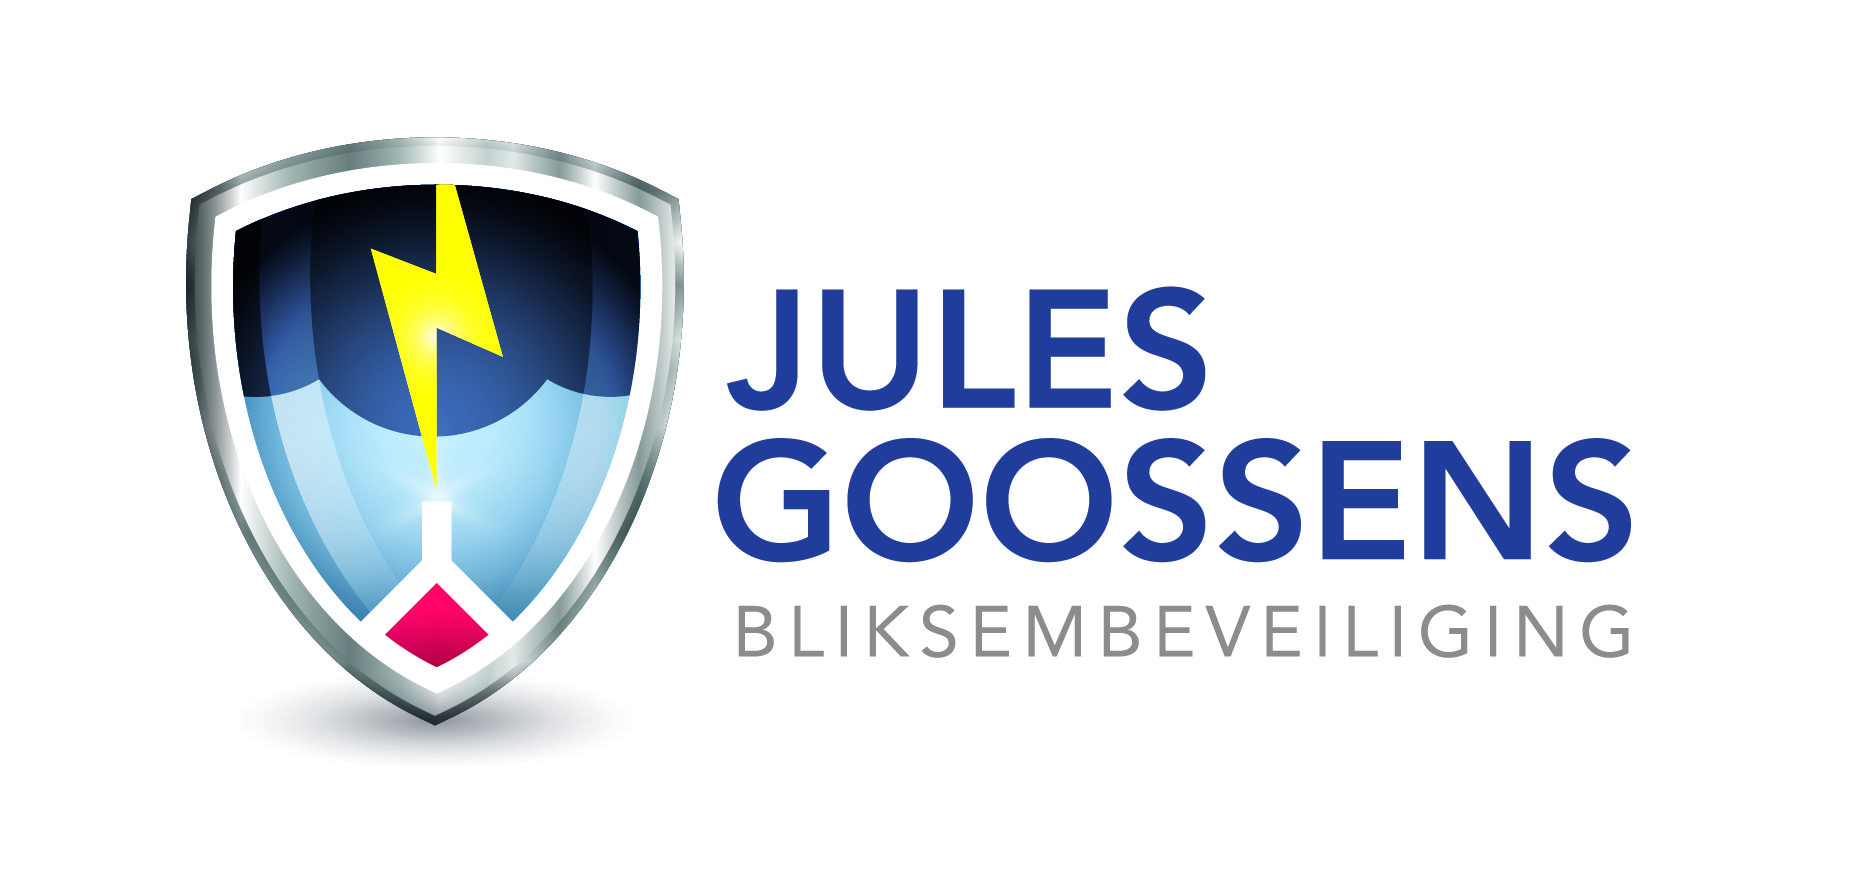 Jules Goossens